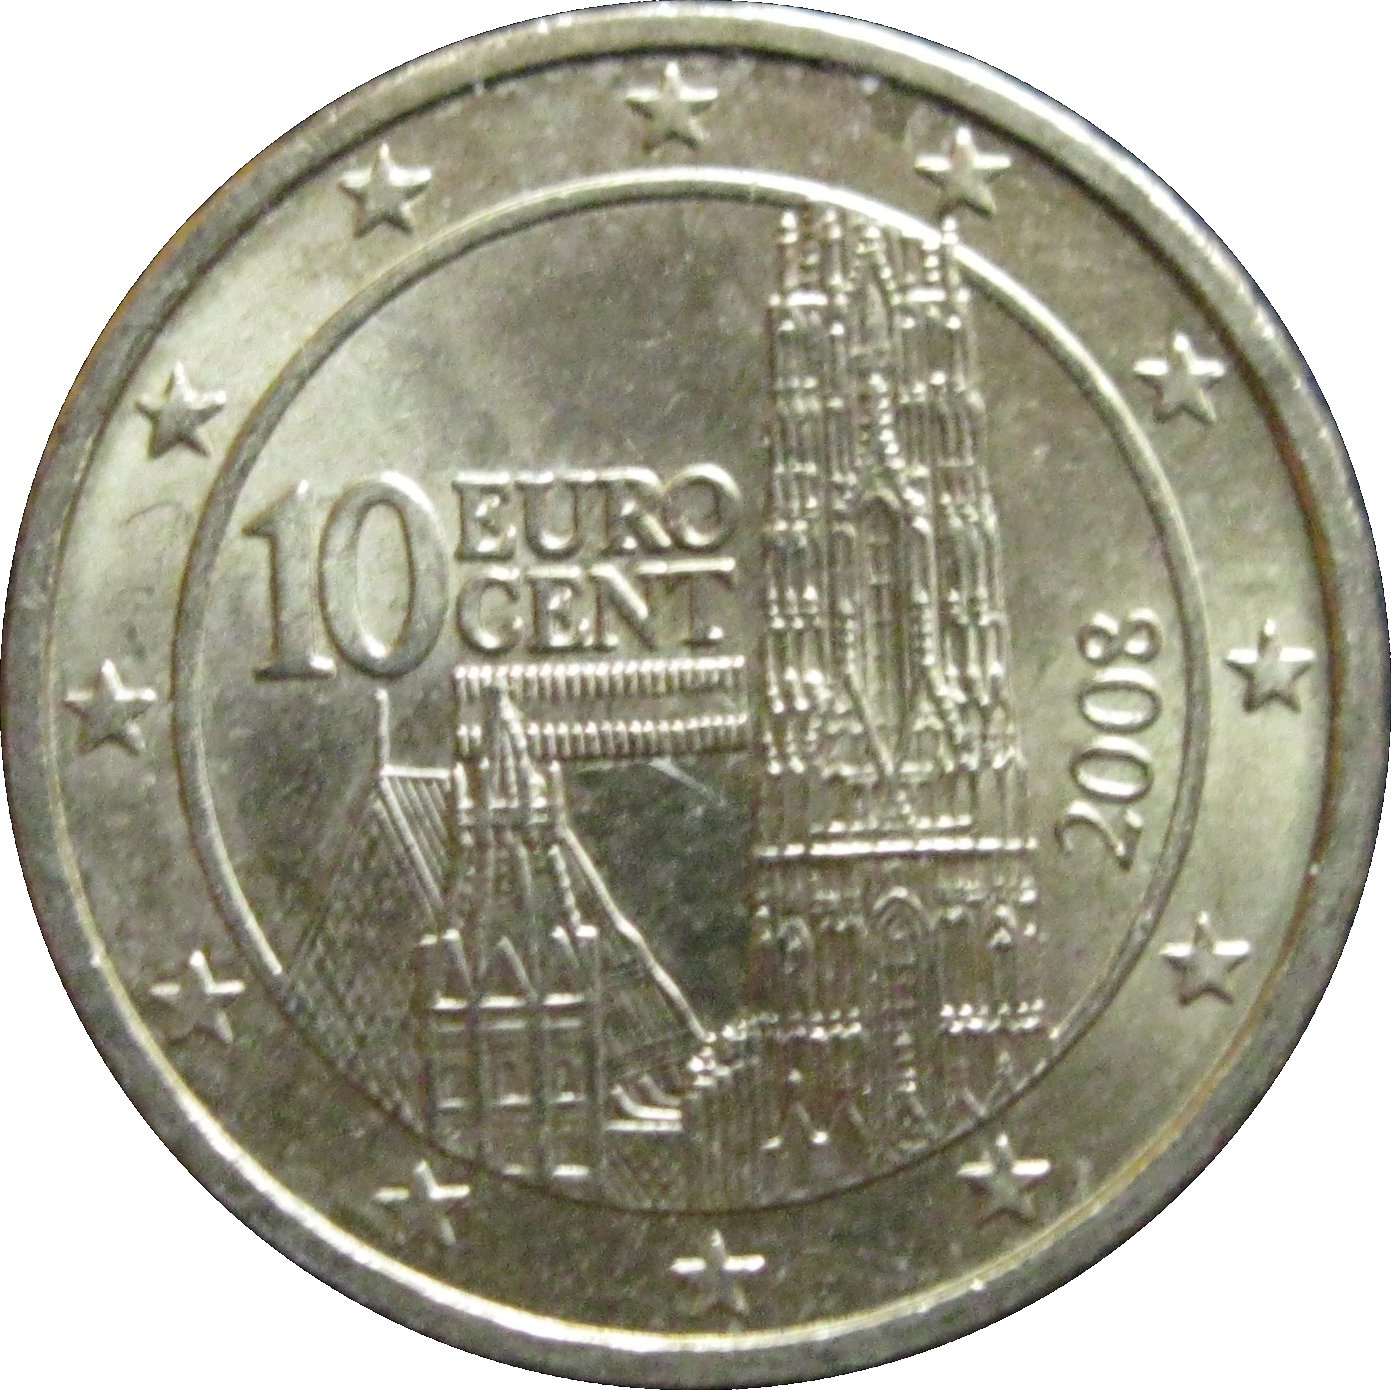 10 Euro Cent (2nd map) - Austria – Numista